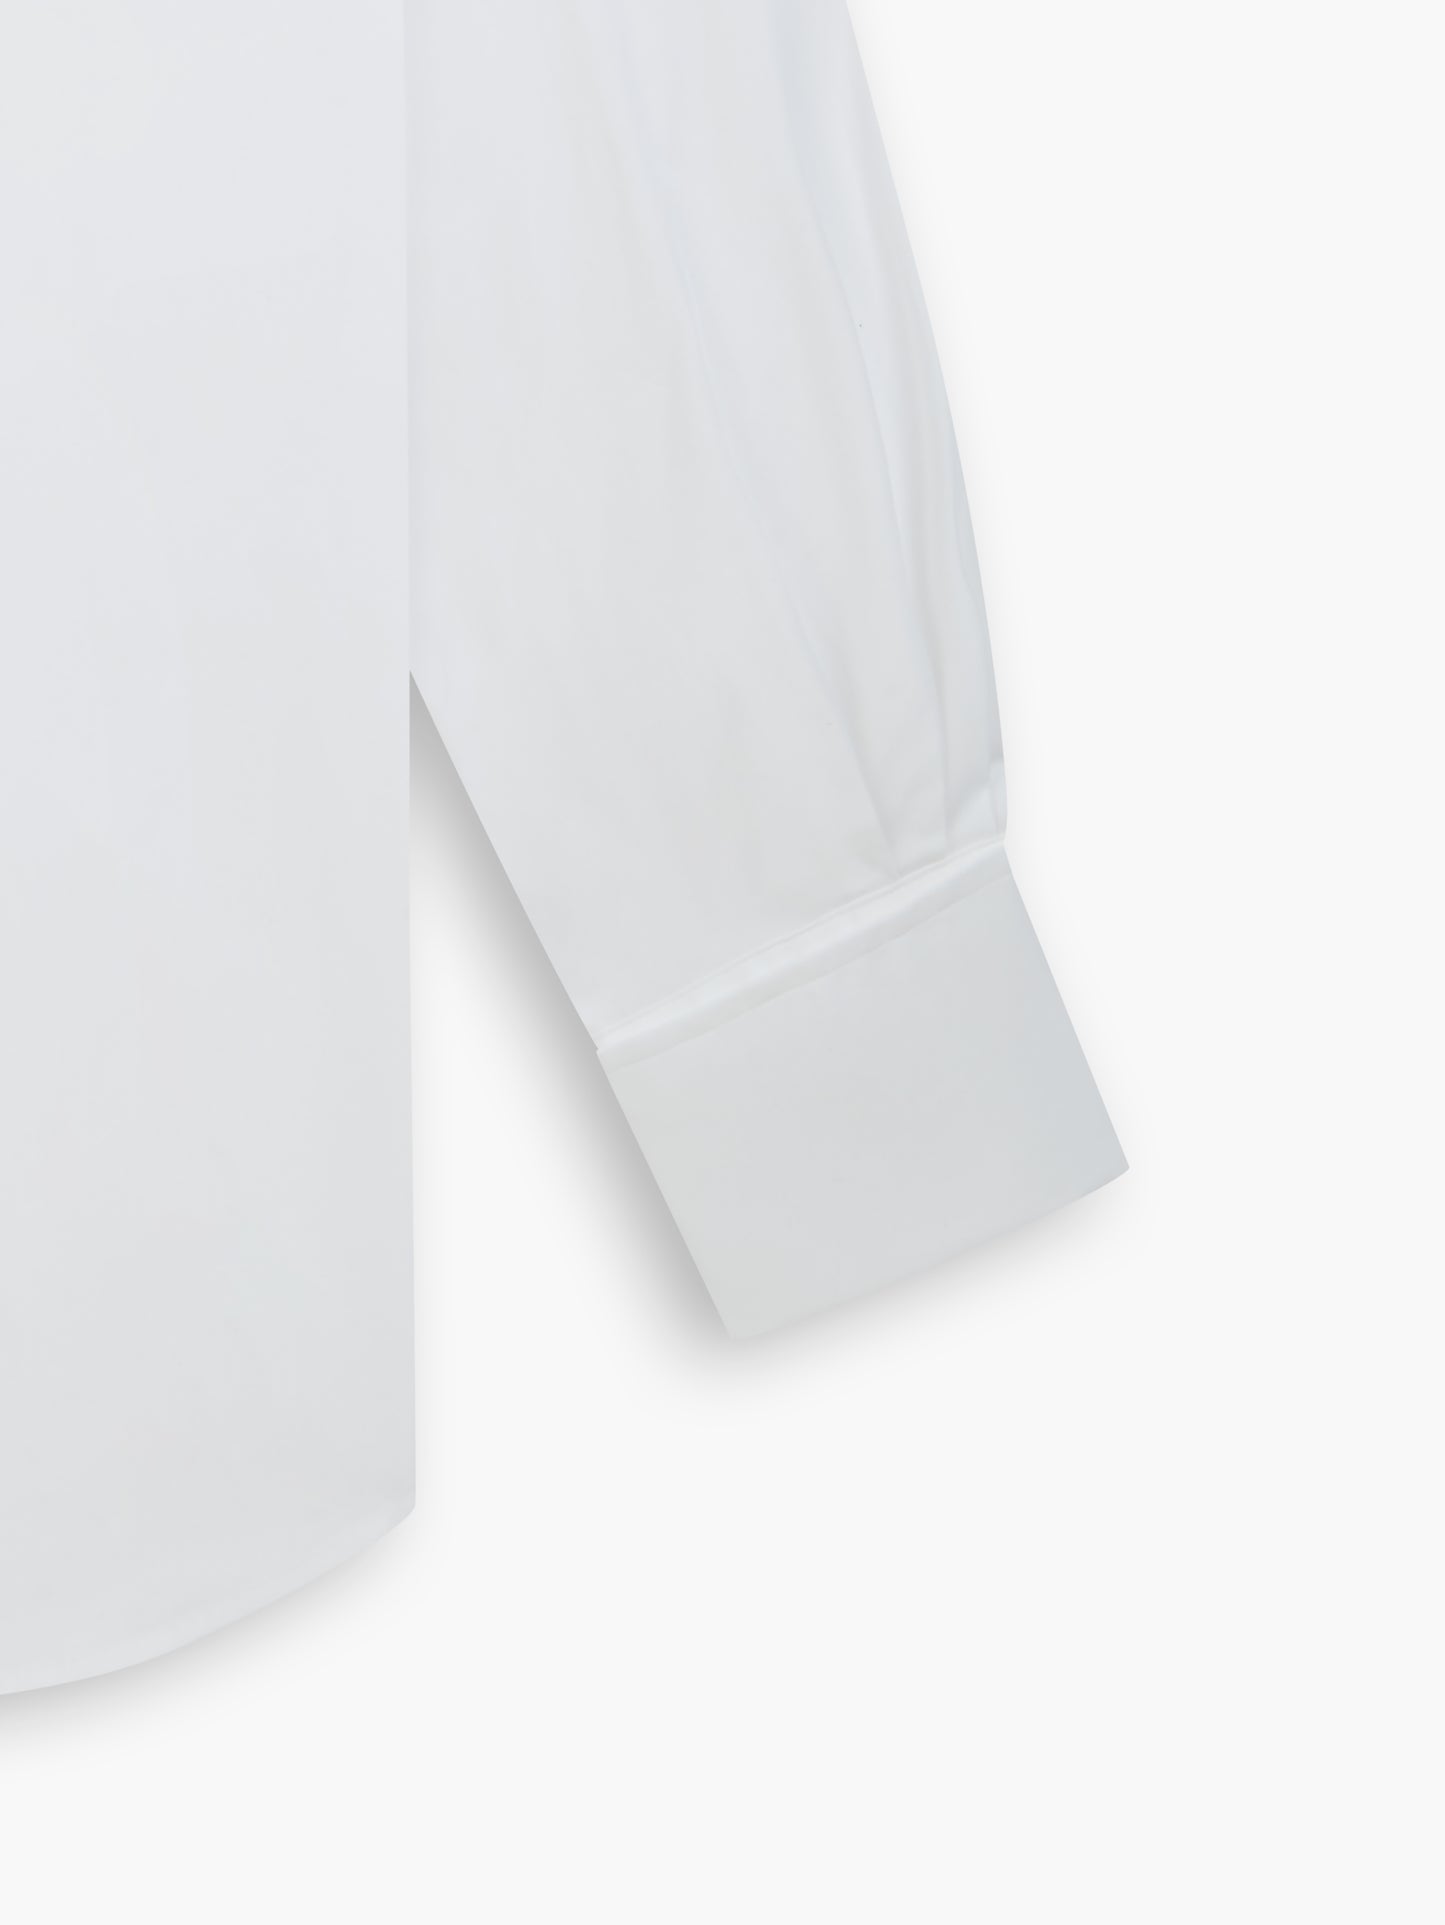 White Poplin Stretch Slim Fit Double Cuff Classic Collar Shirt